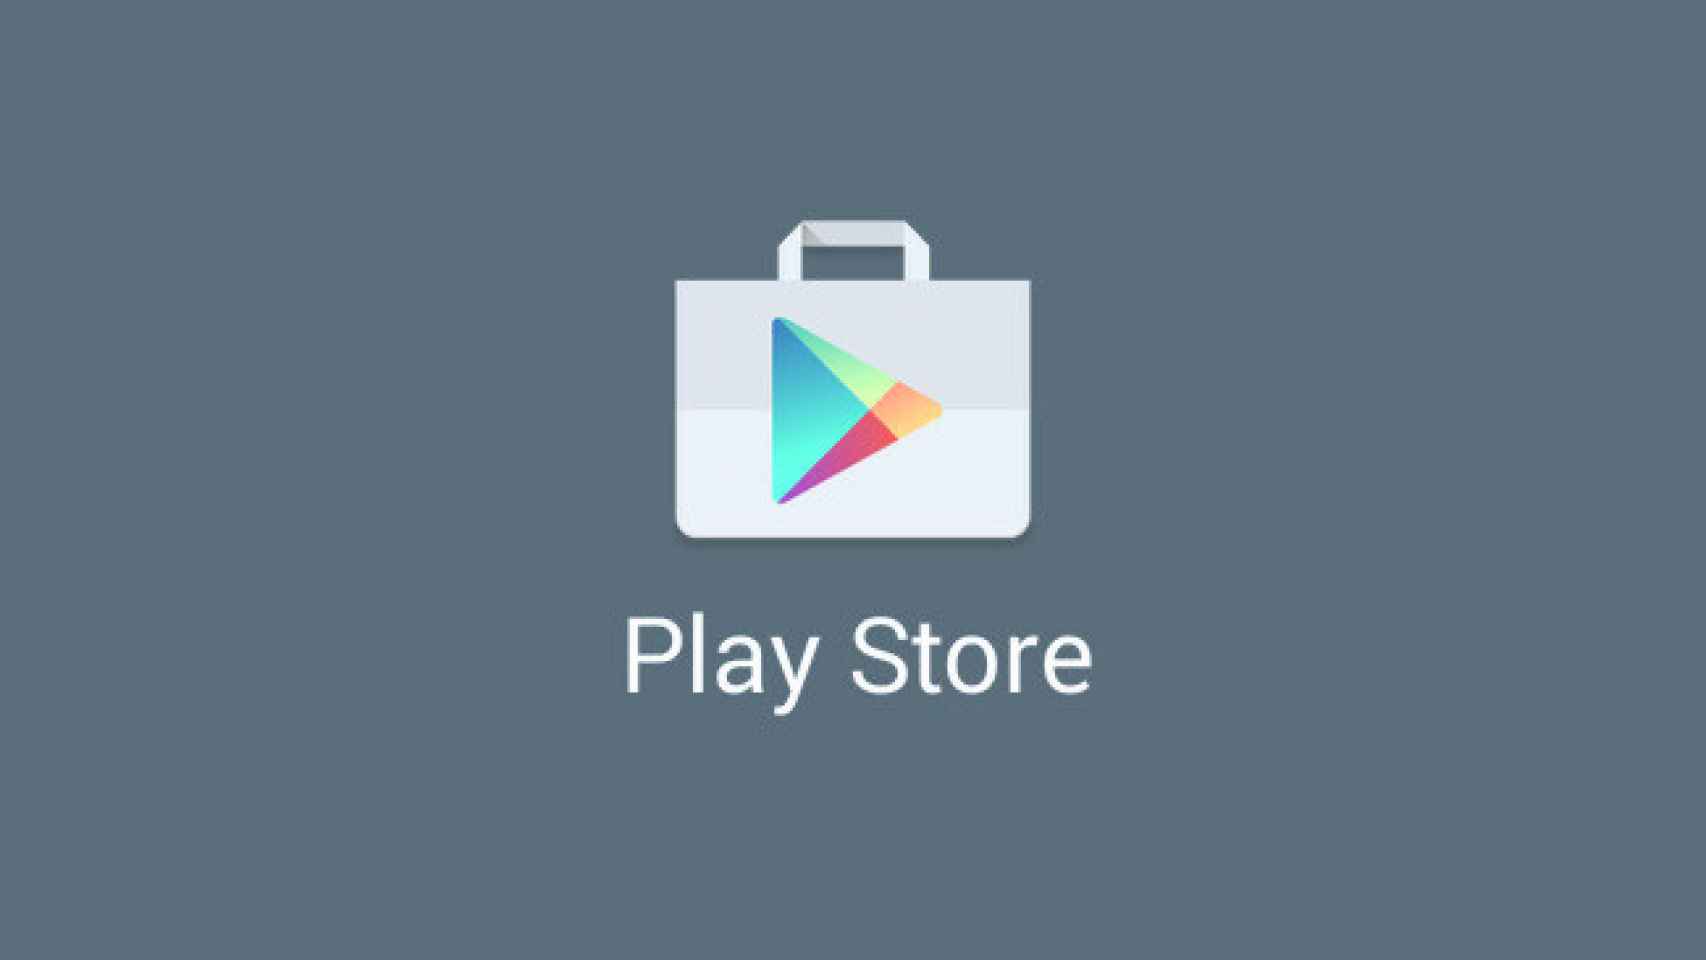 Descargar Play Store